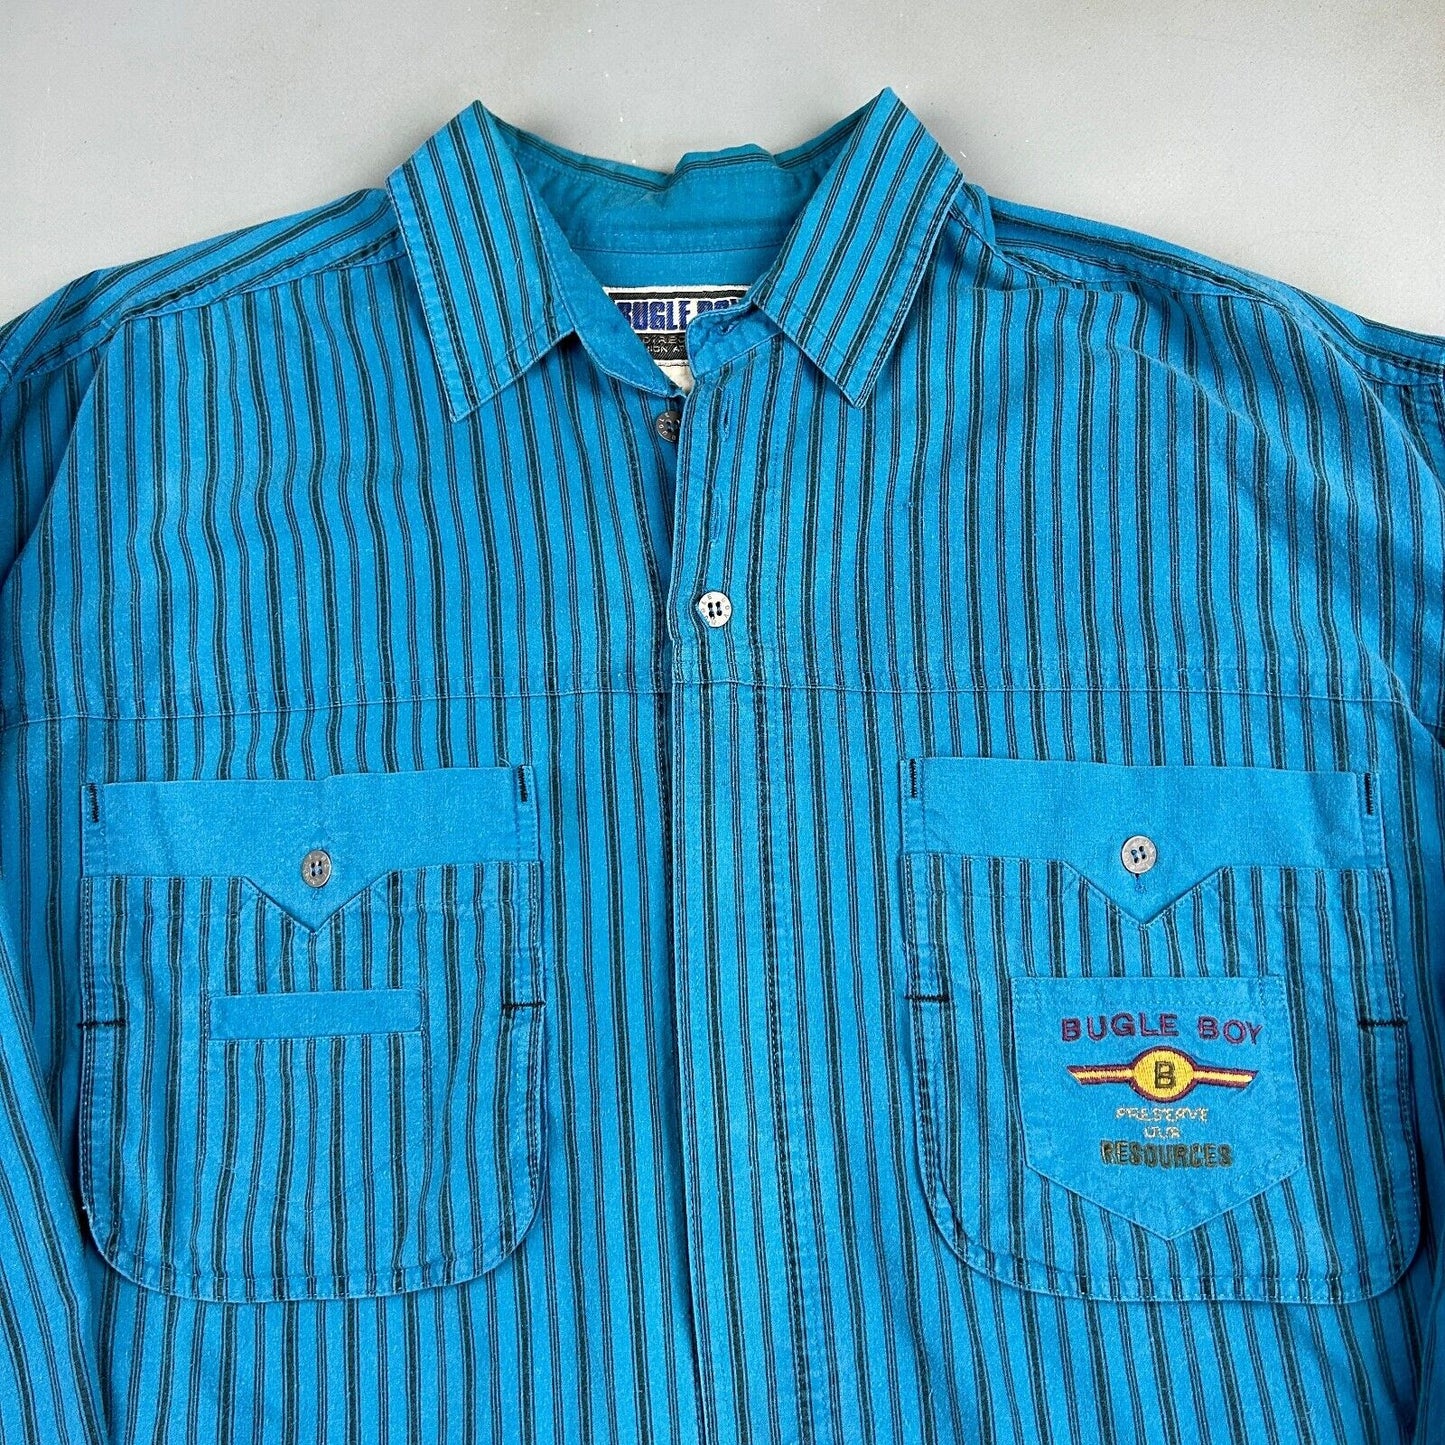 VINTAGE 90s Bugle Boy Preserve Our Resources Striped Button Up Shirt sz M Adult